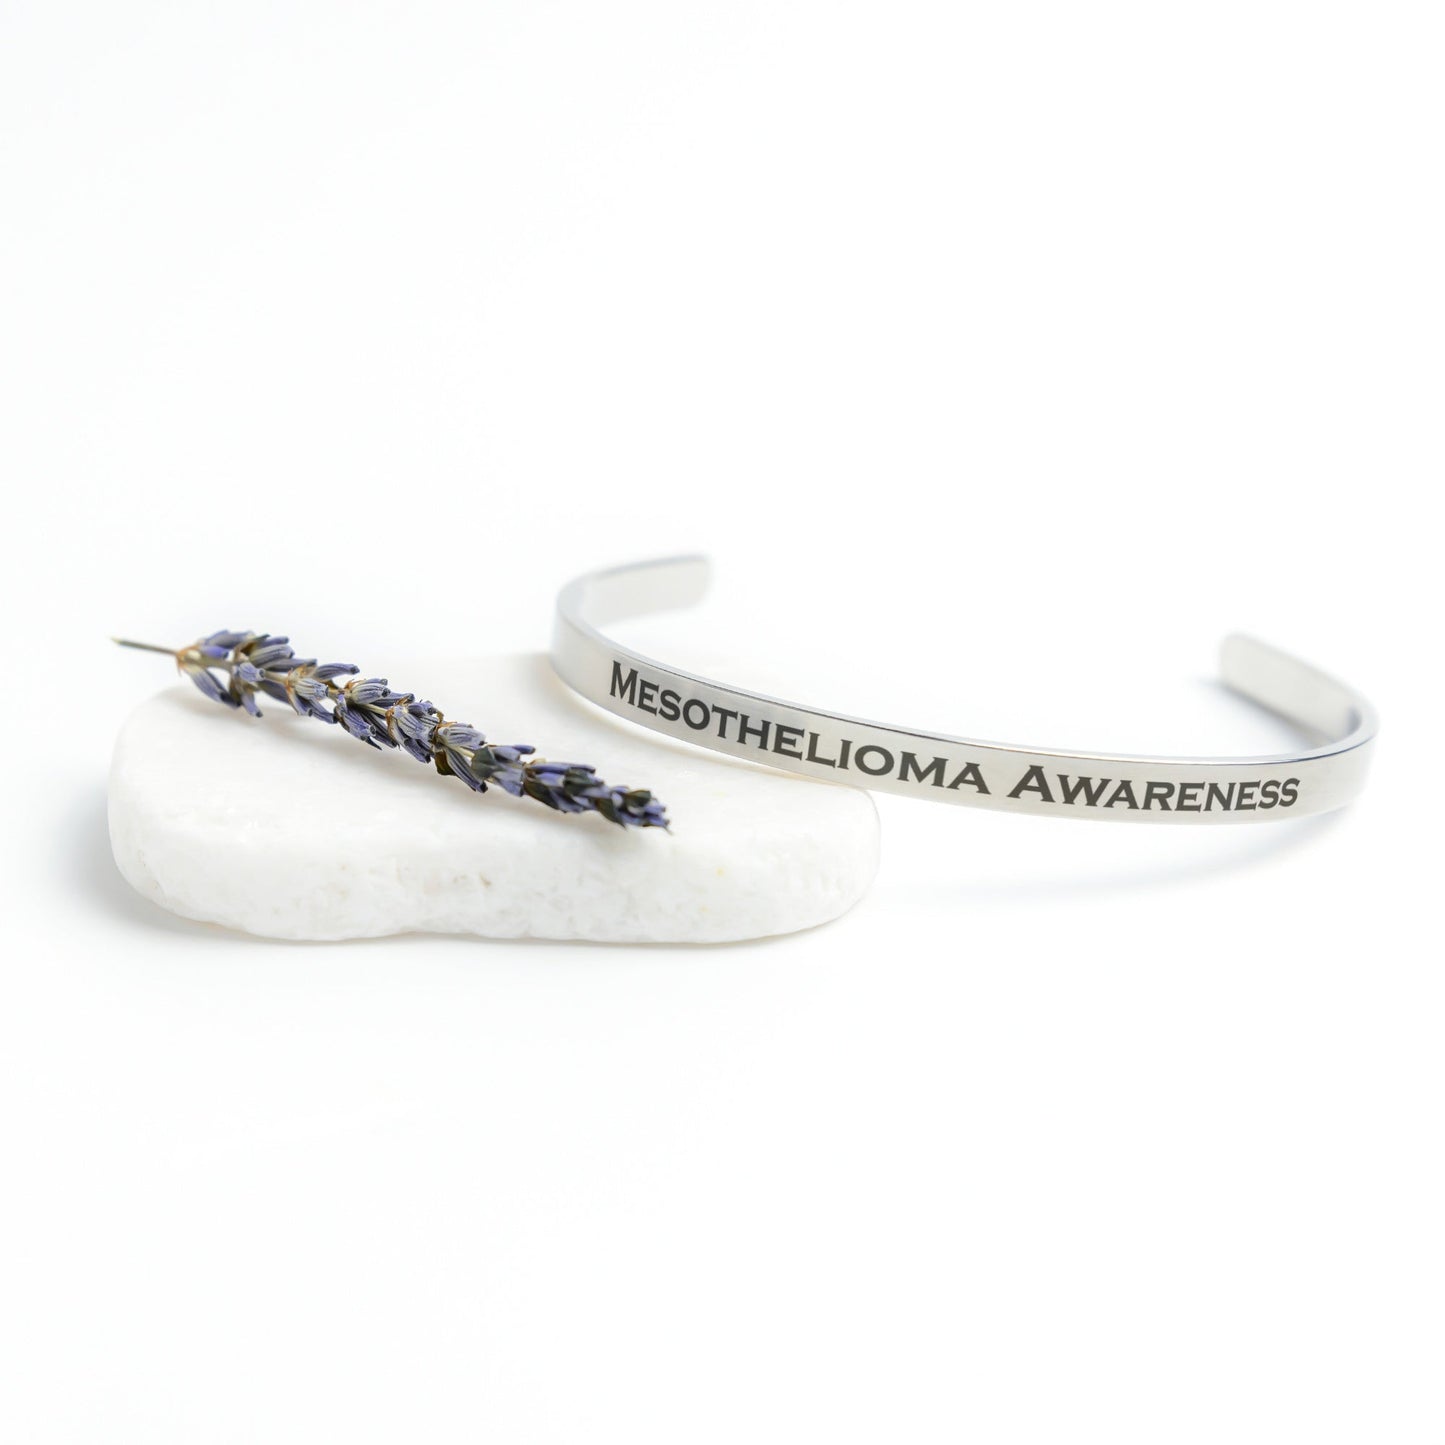 Personalized Mesothelioma Awareness Cuff Bracelet |x|